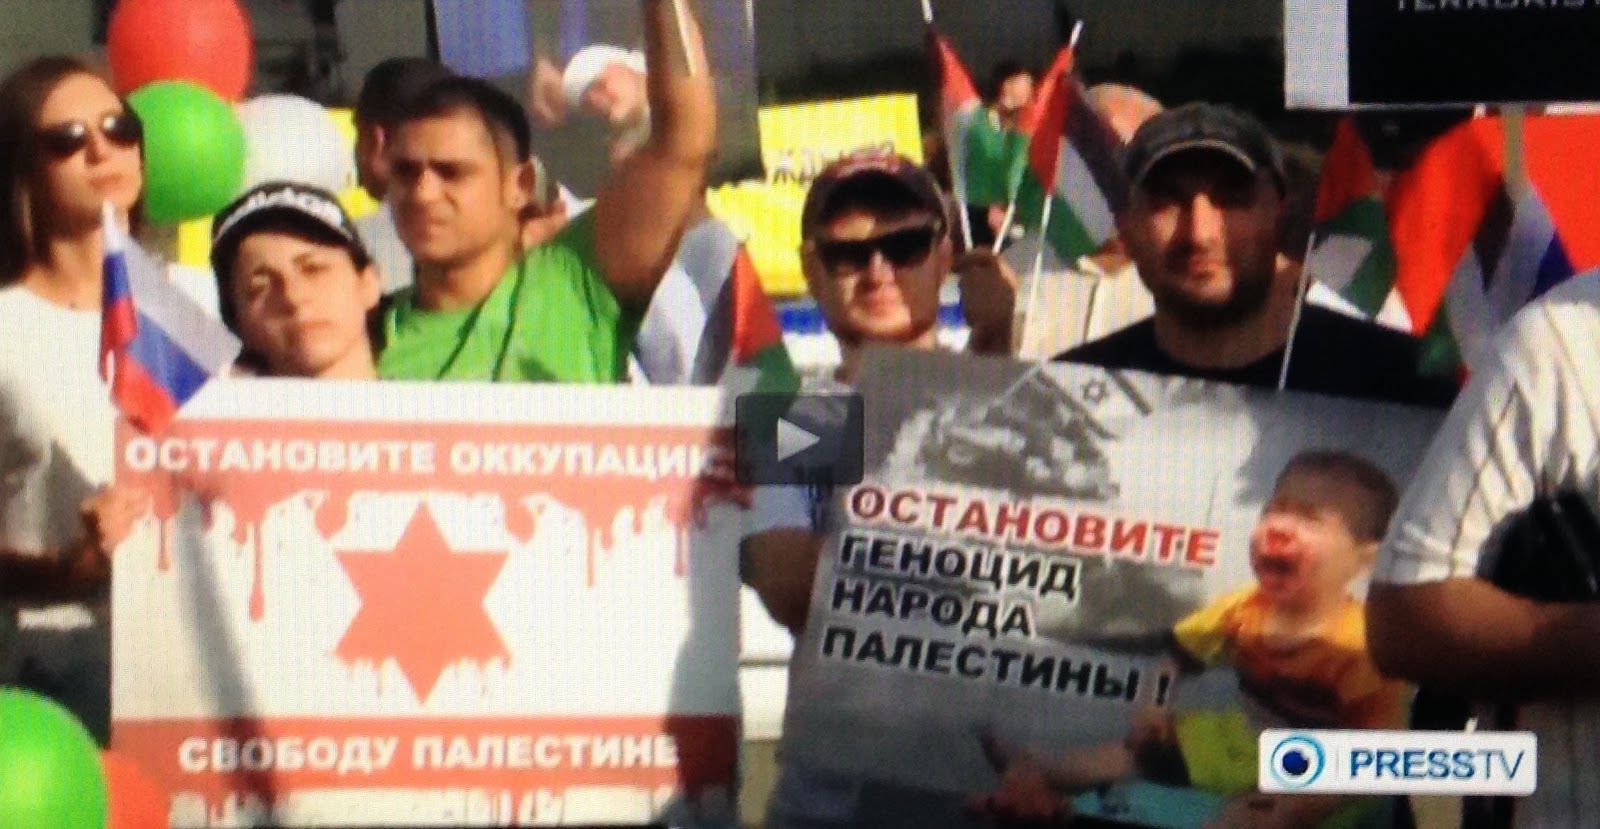 http://www.presstv.com/detail/2014/08/07/374347/russians-hold-antiisrael-protests/